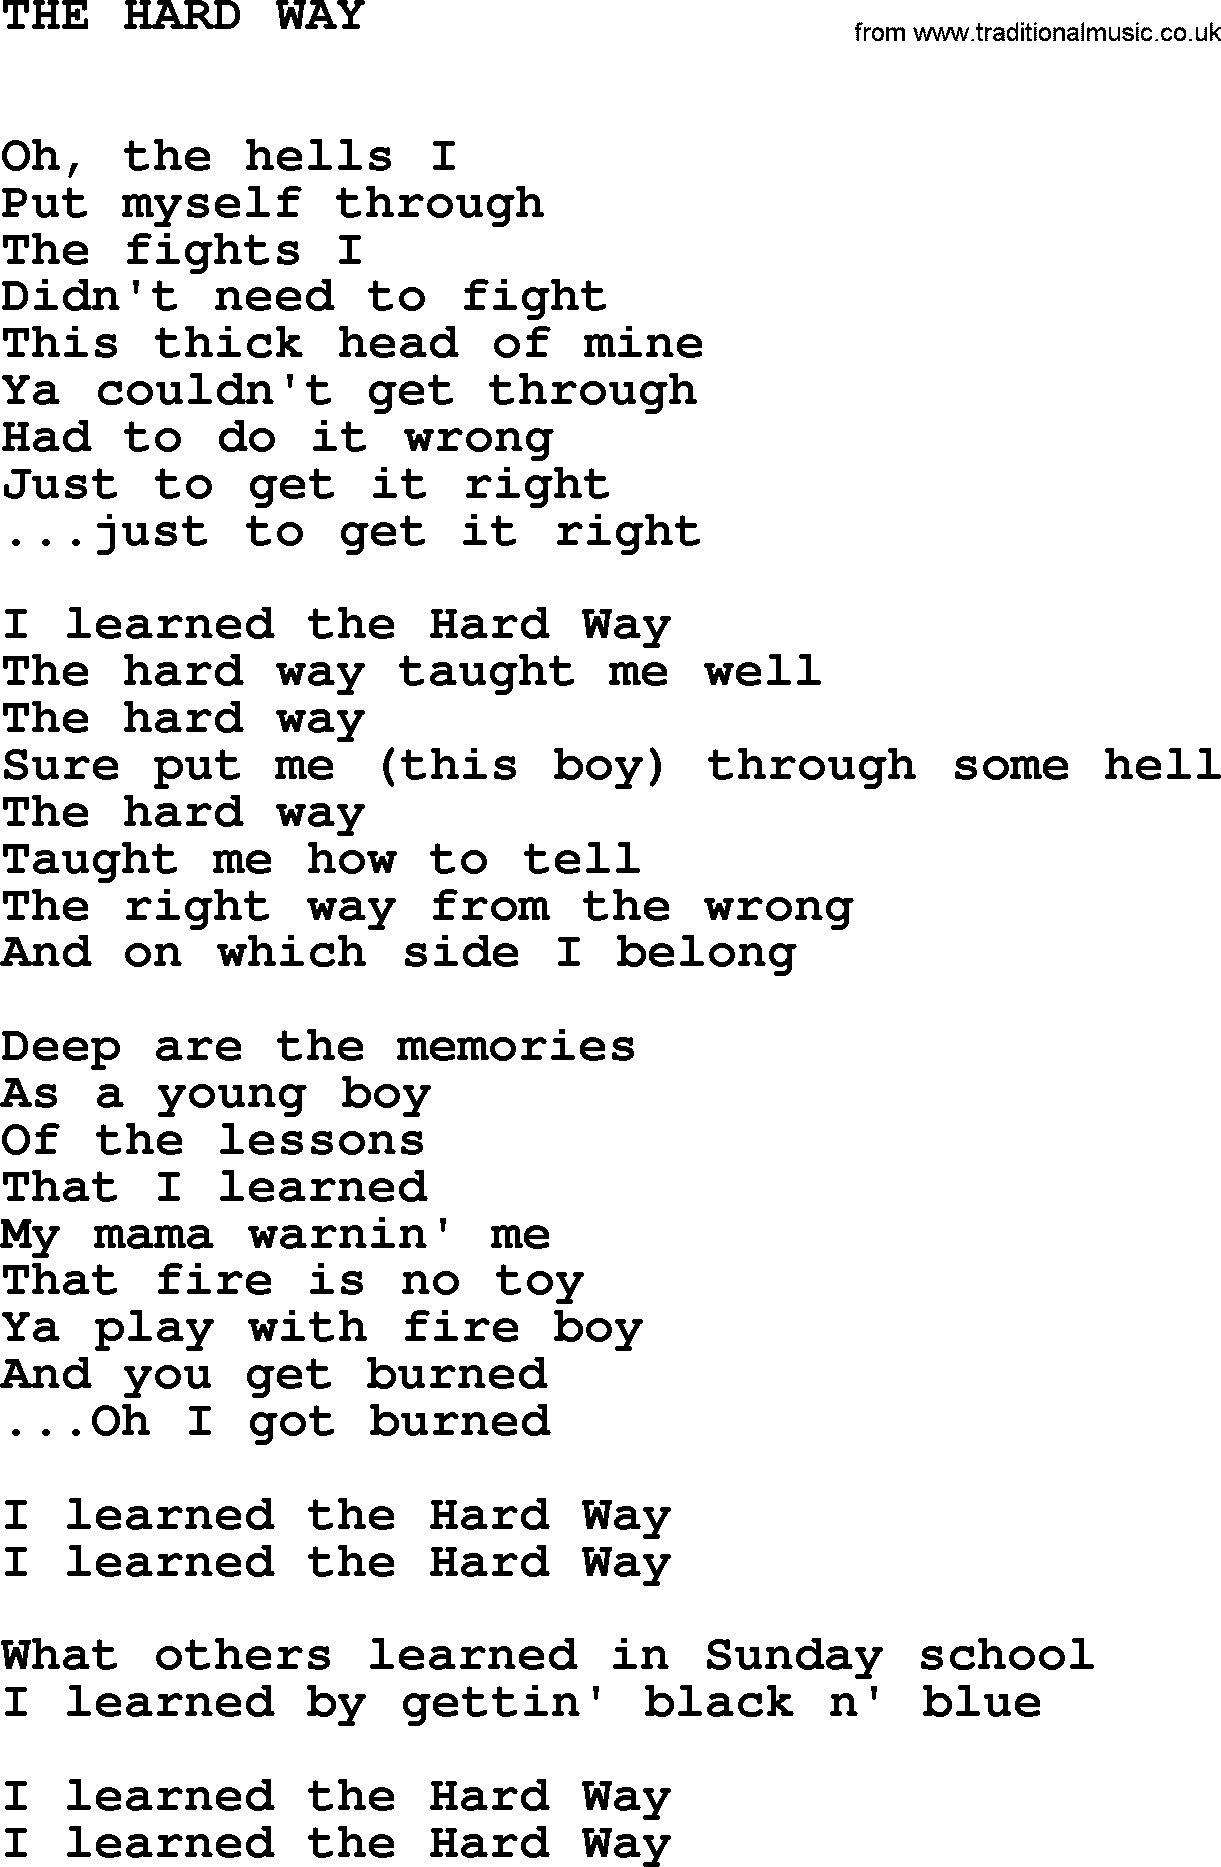 Johnny Cash song The Hard Way.txt lyrics